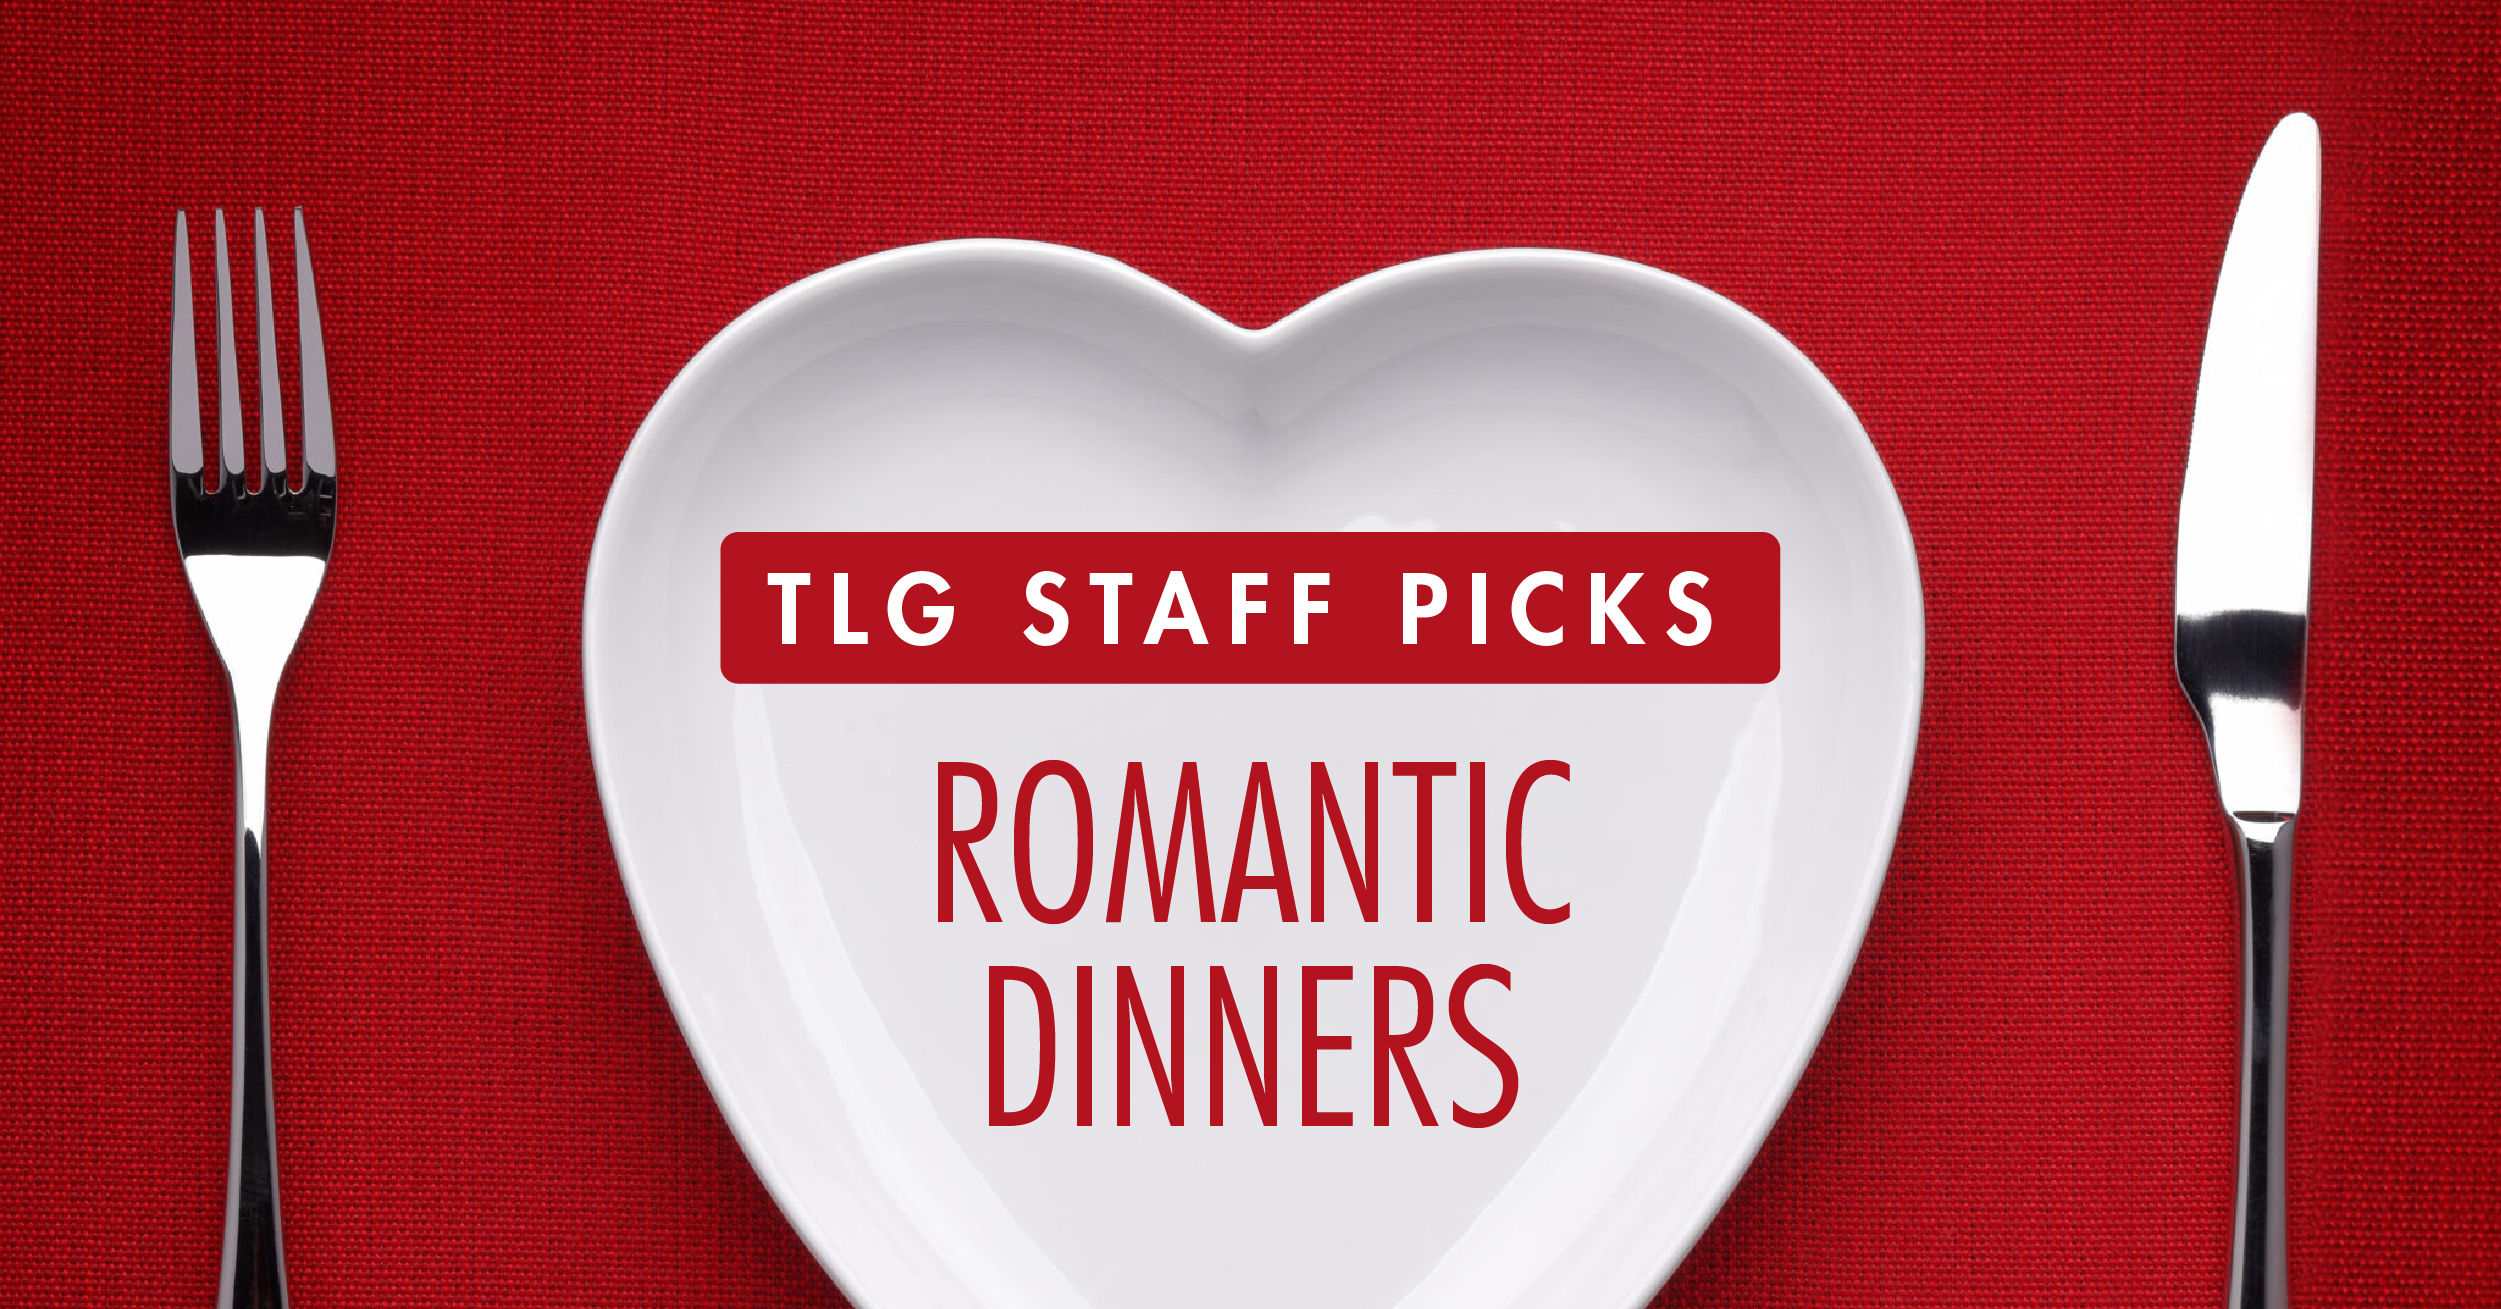 Where to Dine this Valentine’s Day – TLG Staff Picks